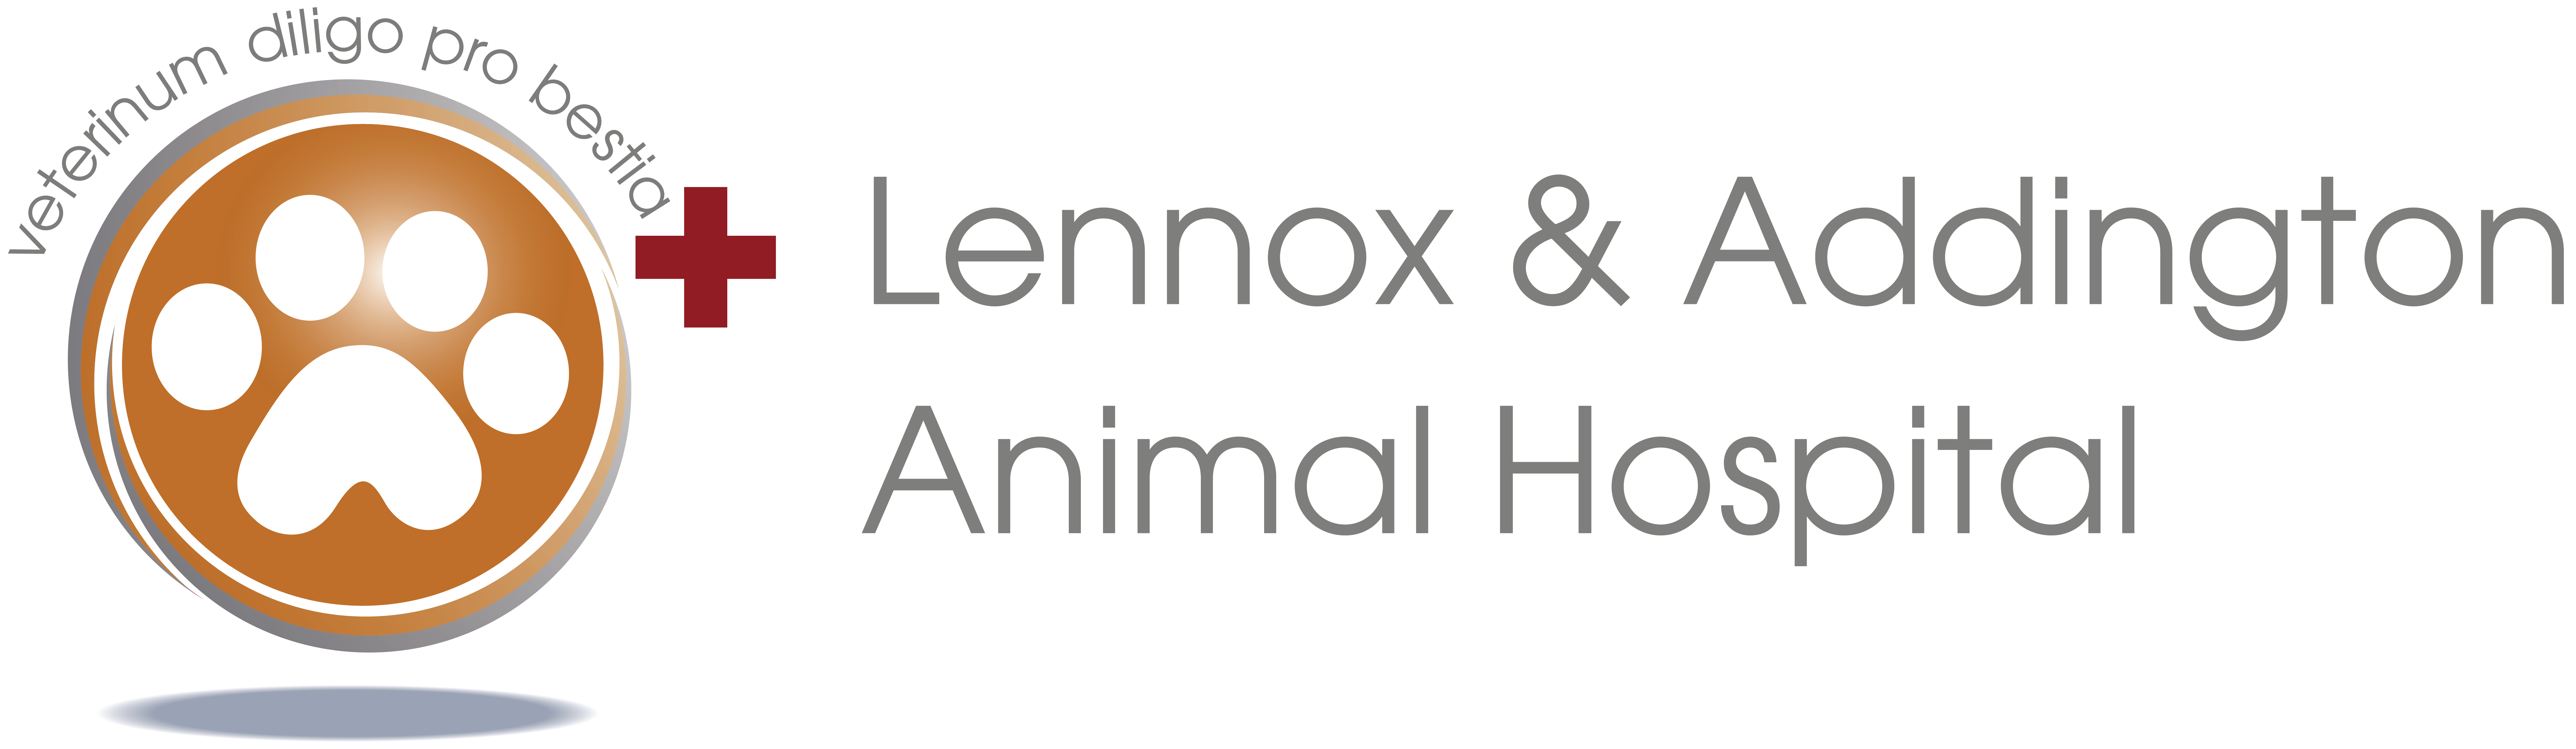 Lennox and Addington Animal Hospital